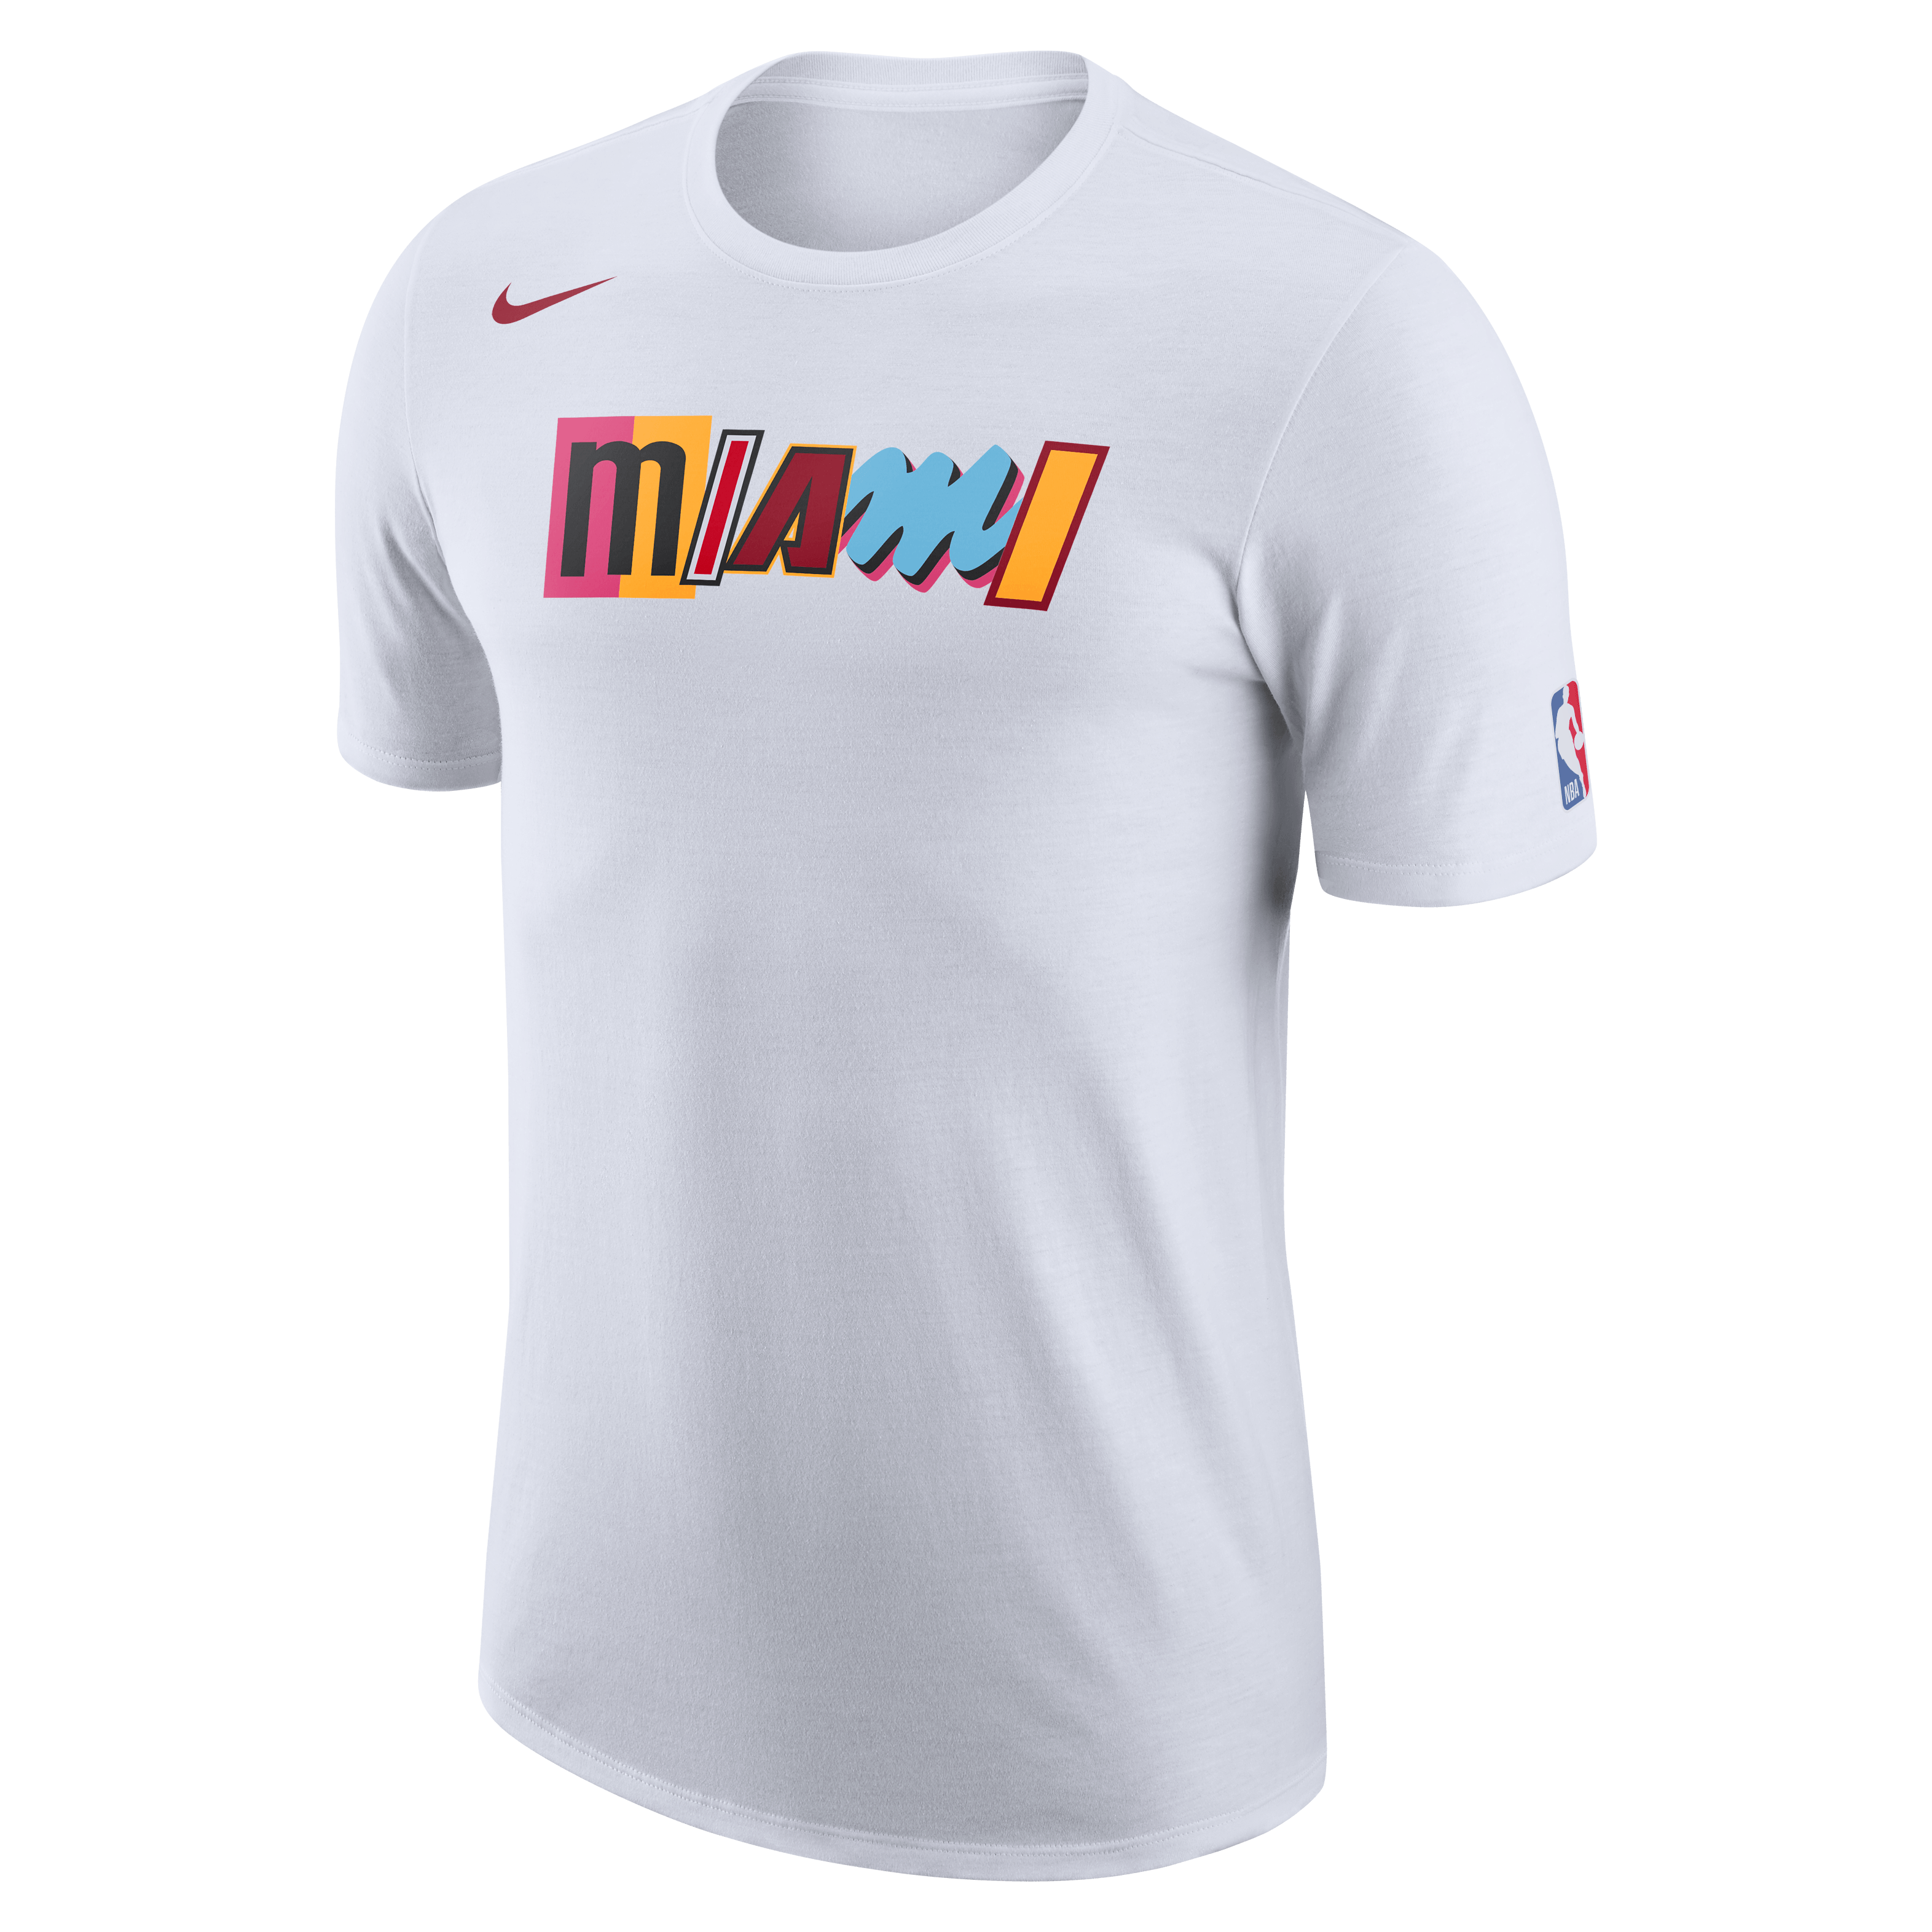 Kyle Lowry Nike Miami Mashup Vol. 2 Swingman Jersey - Player's